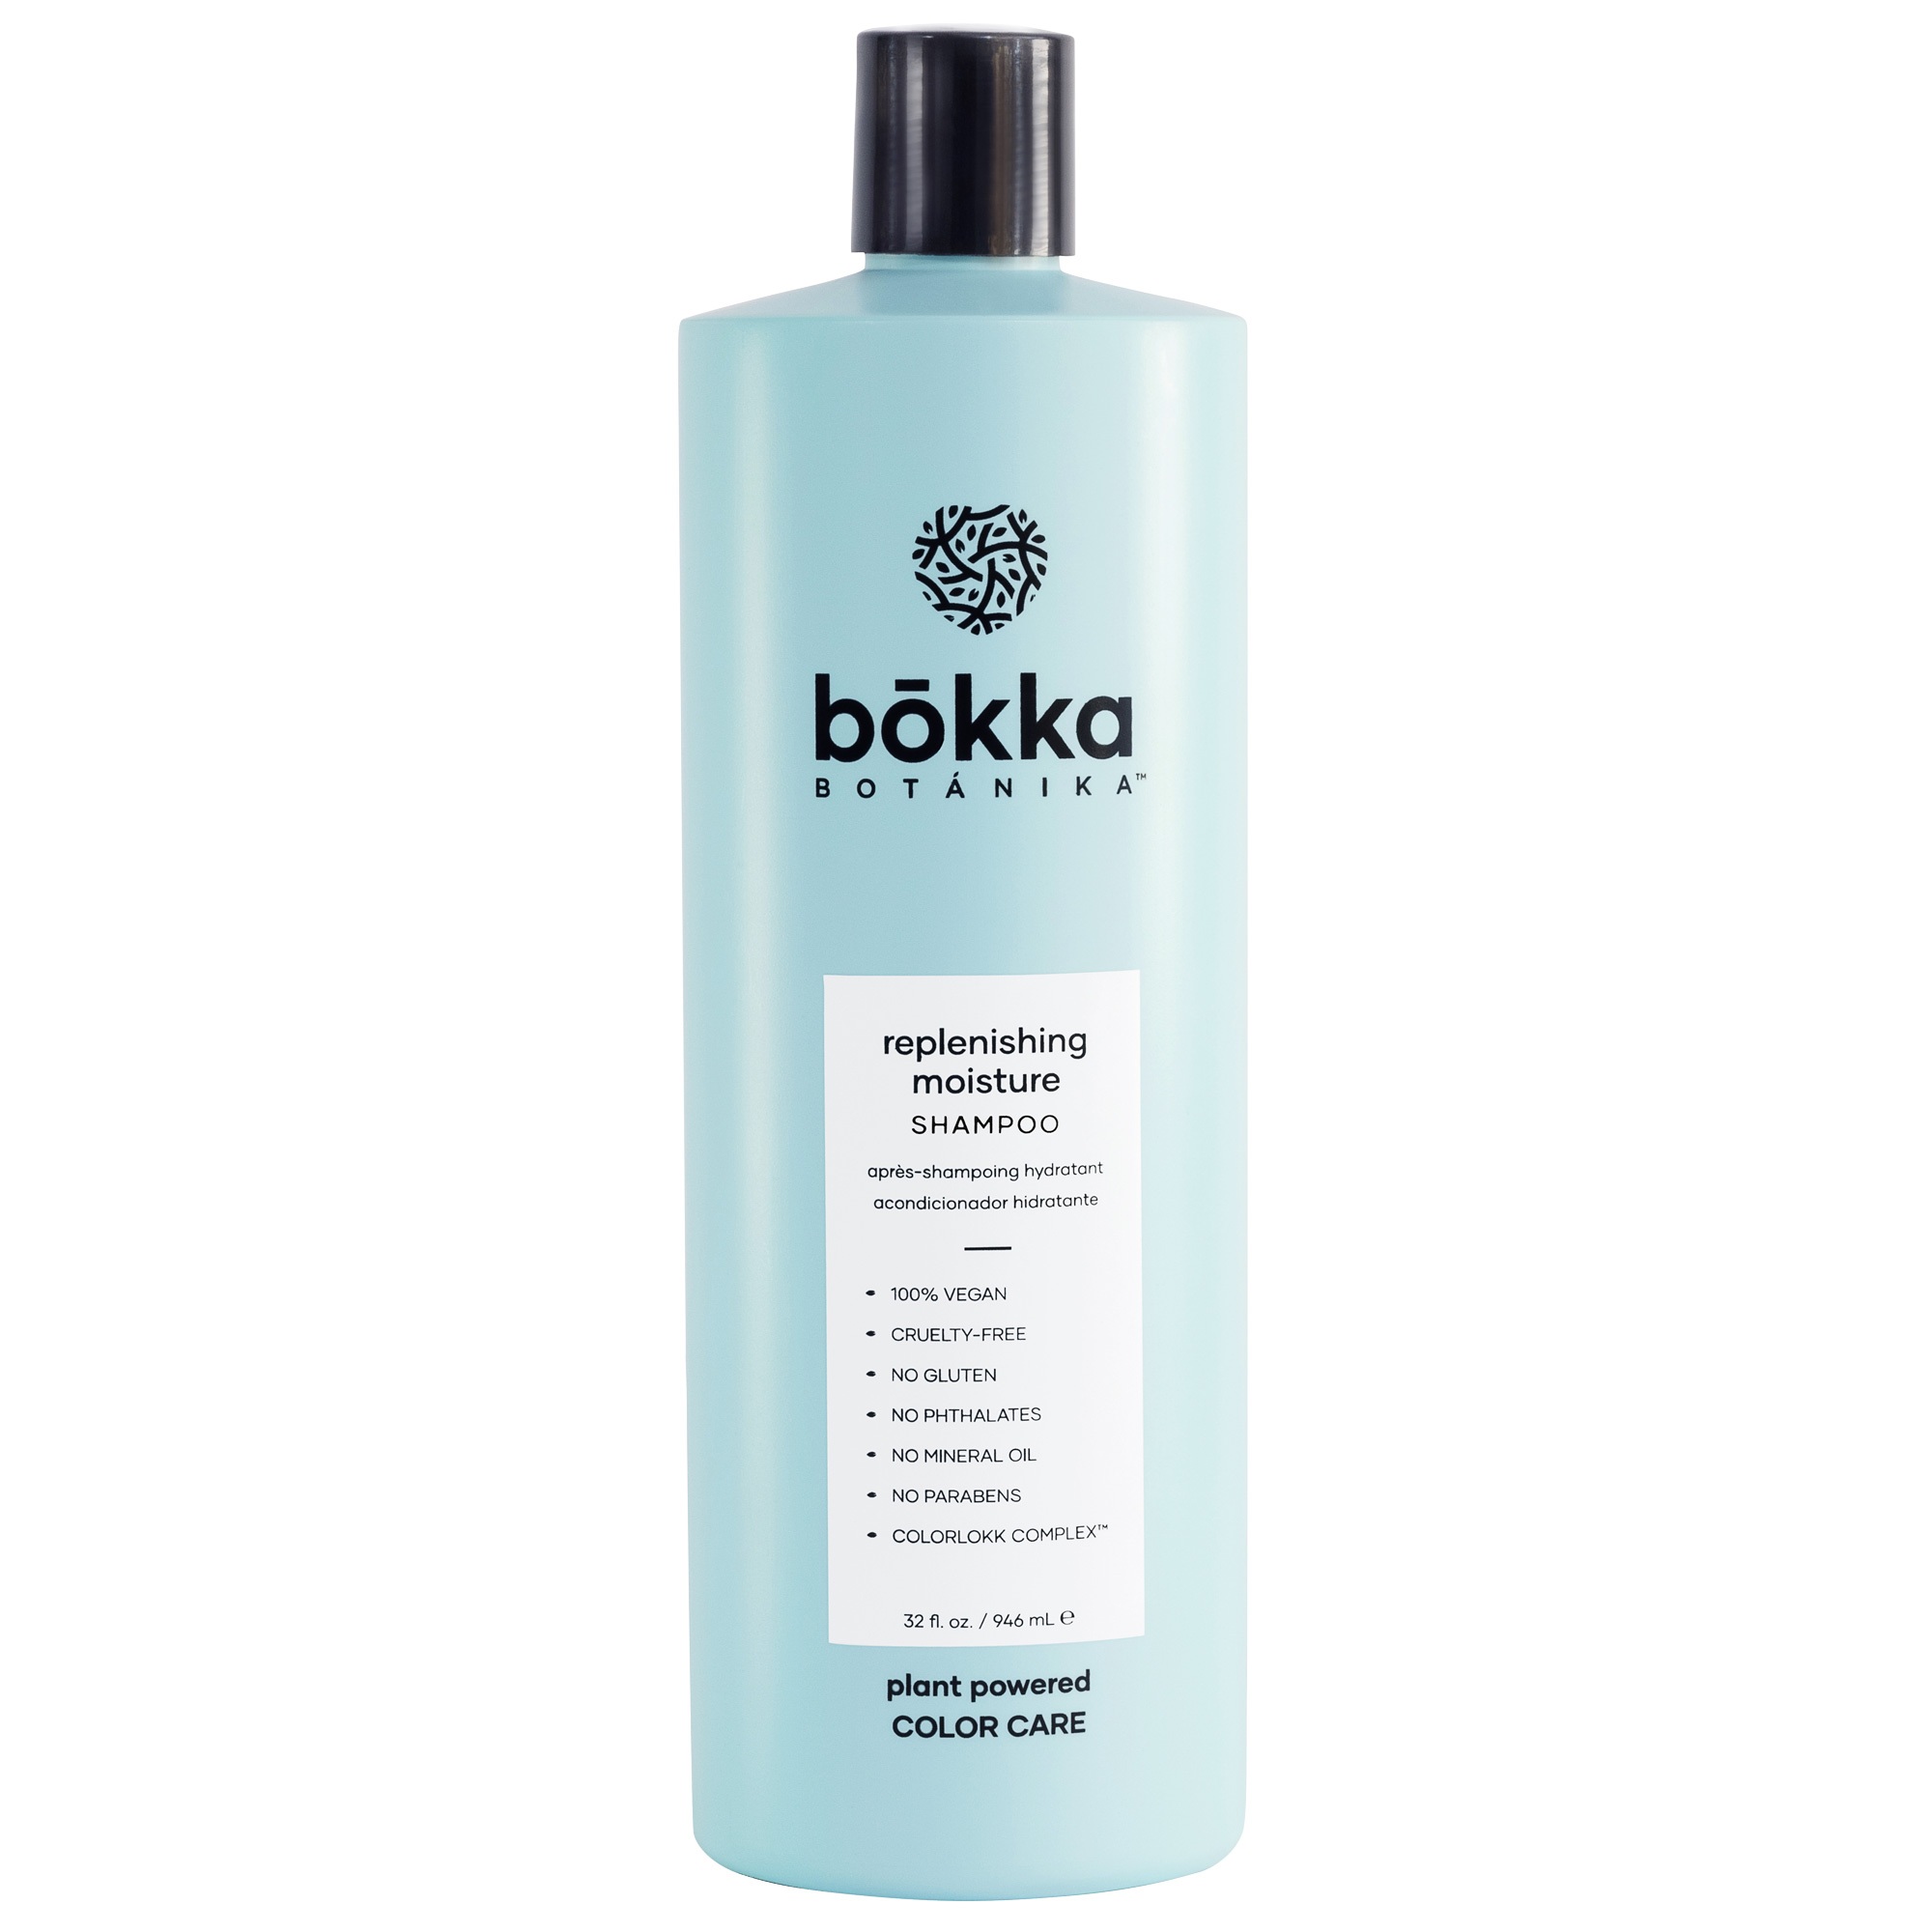 bokka BOTANICA Replenishing Moisture Shampoo 1Liter